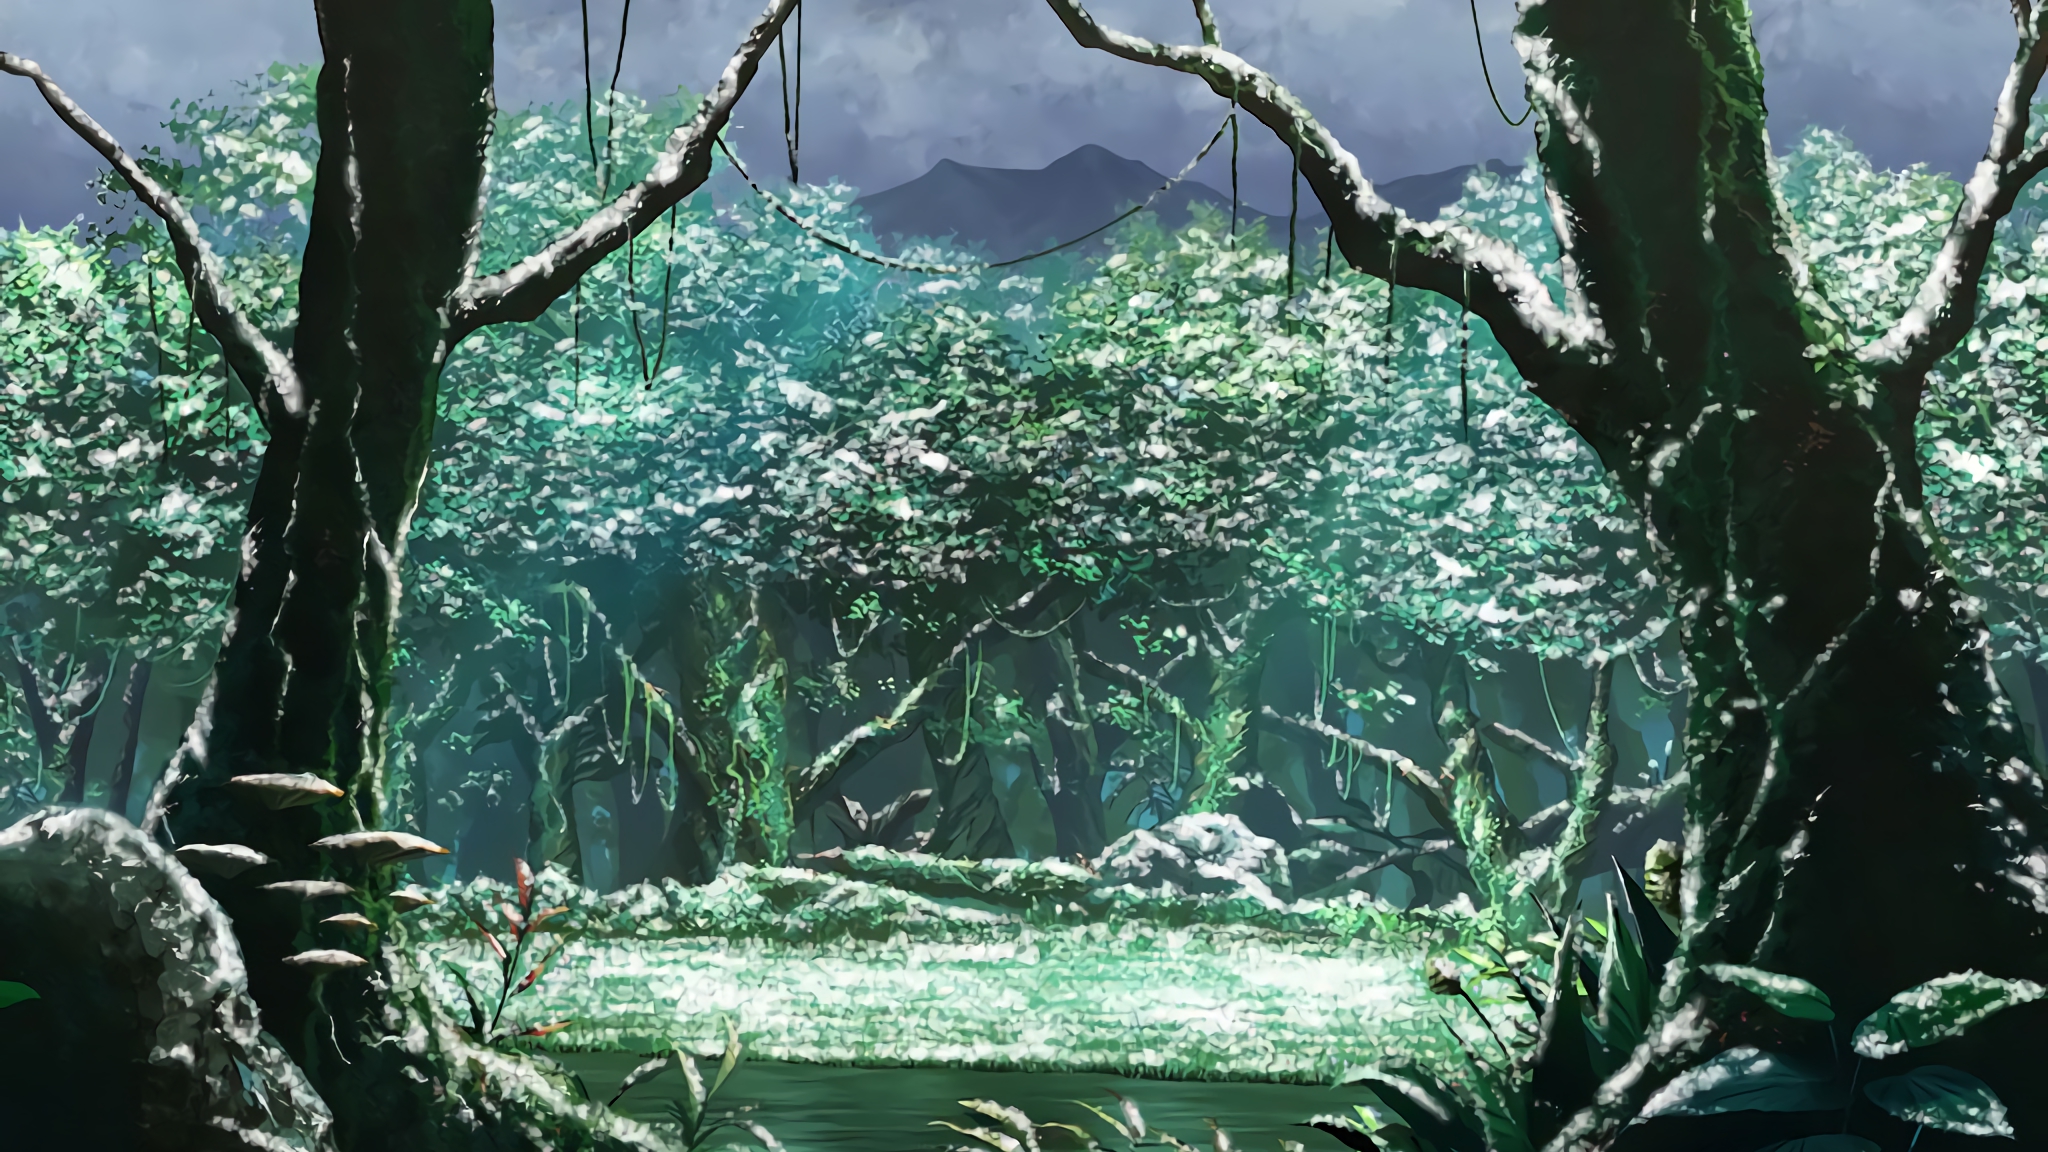 Descarga gratuita de fondo de pantalla para móvil de Sword Art Online, Animado.